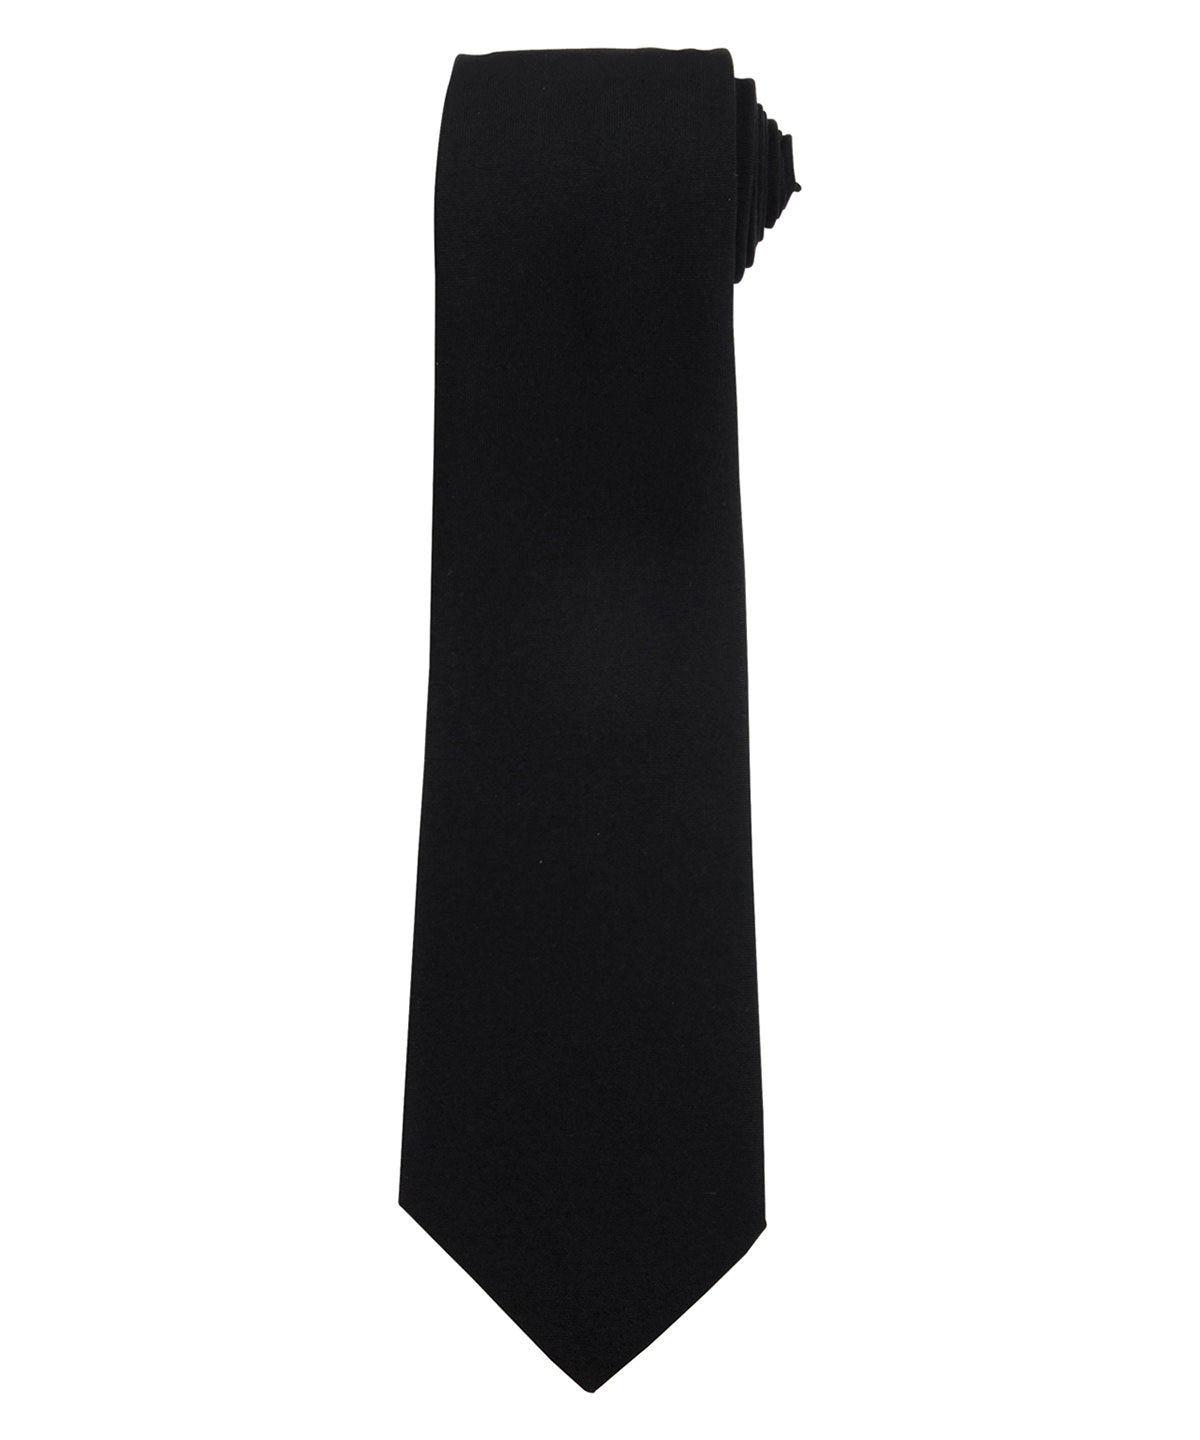 Work tie | Black